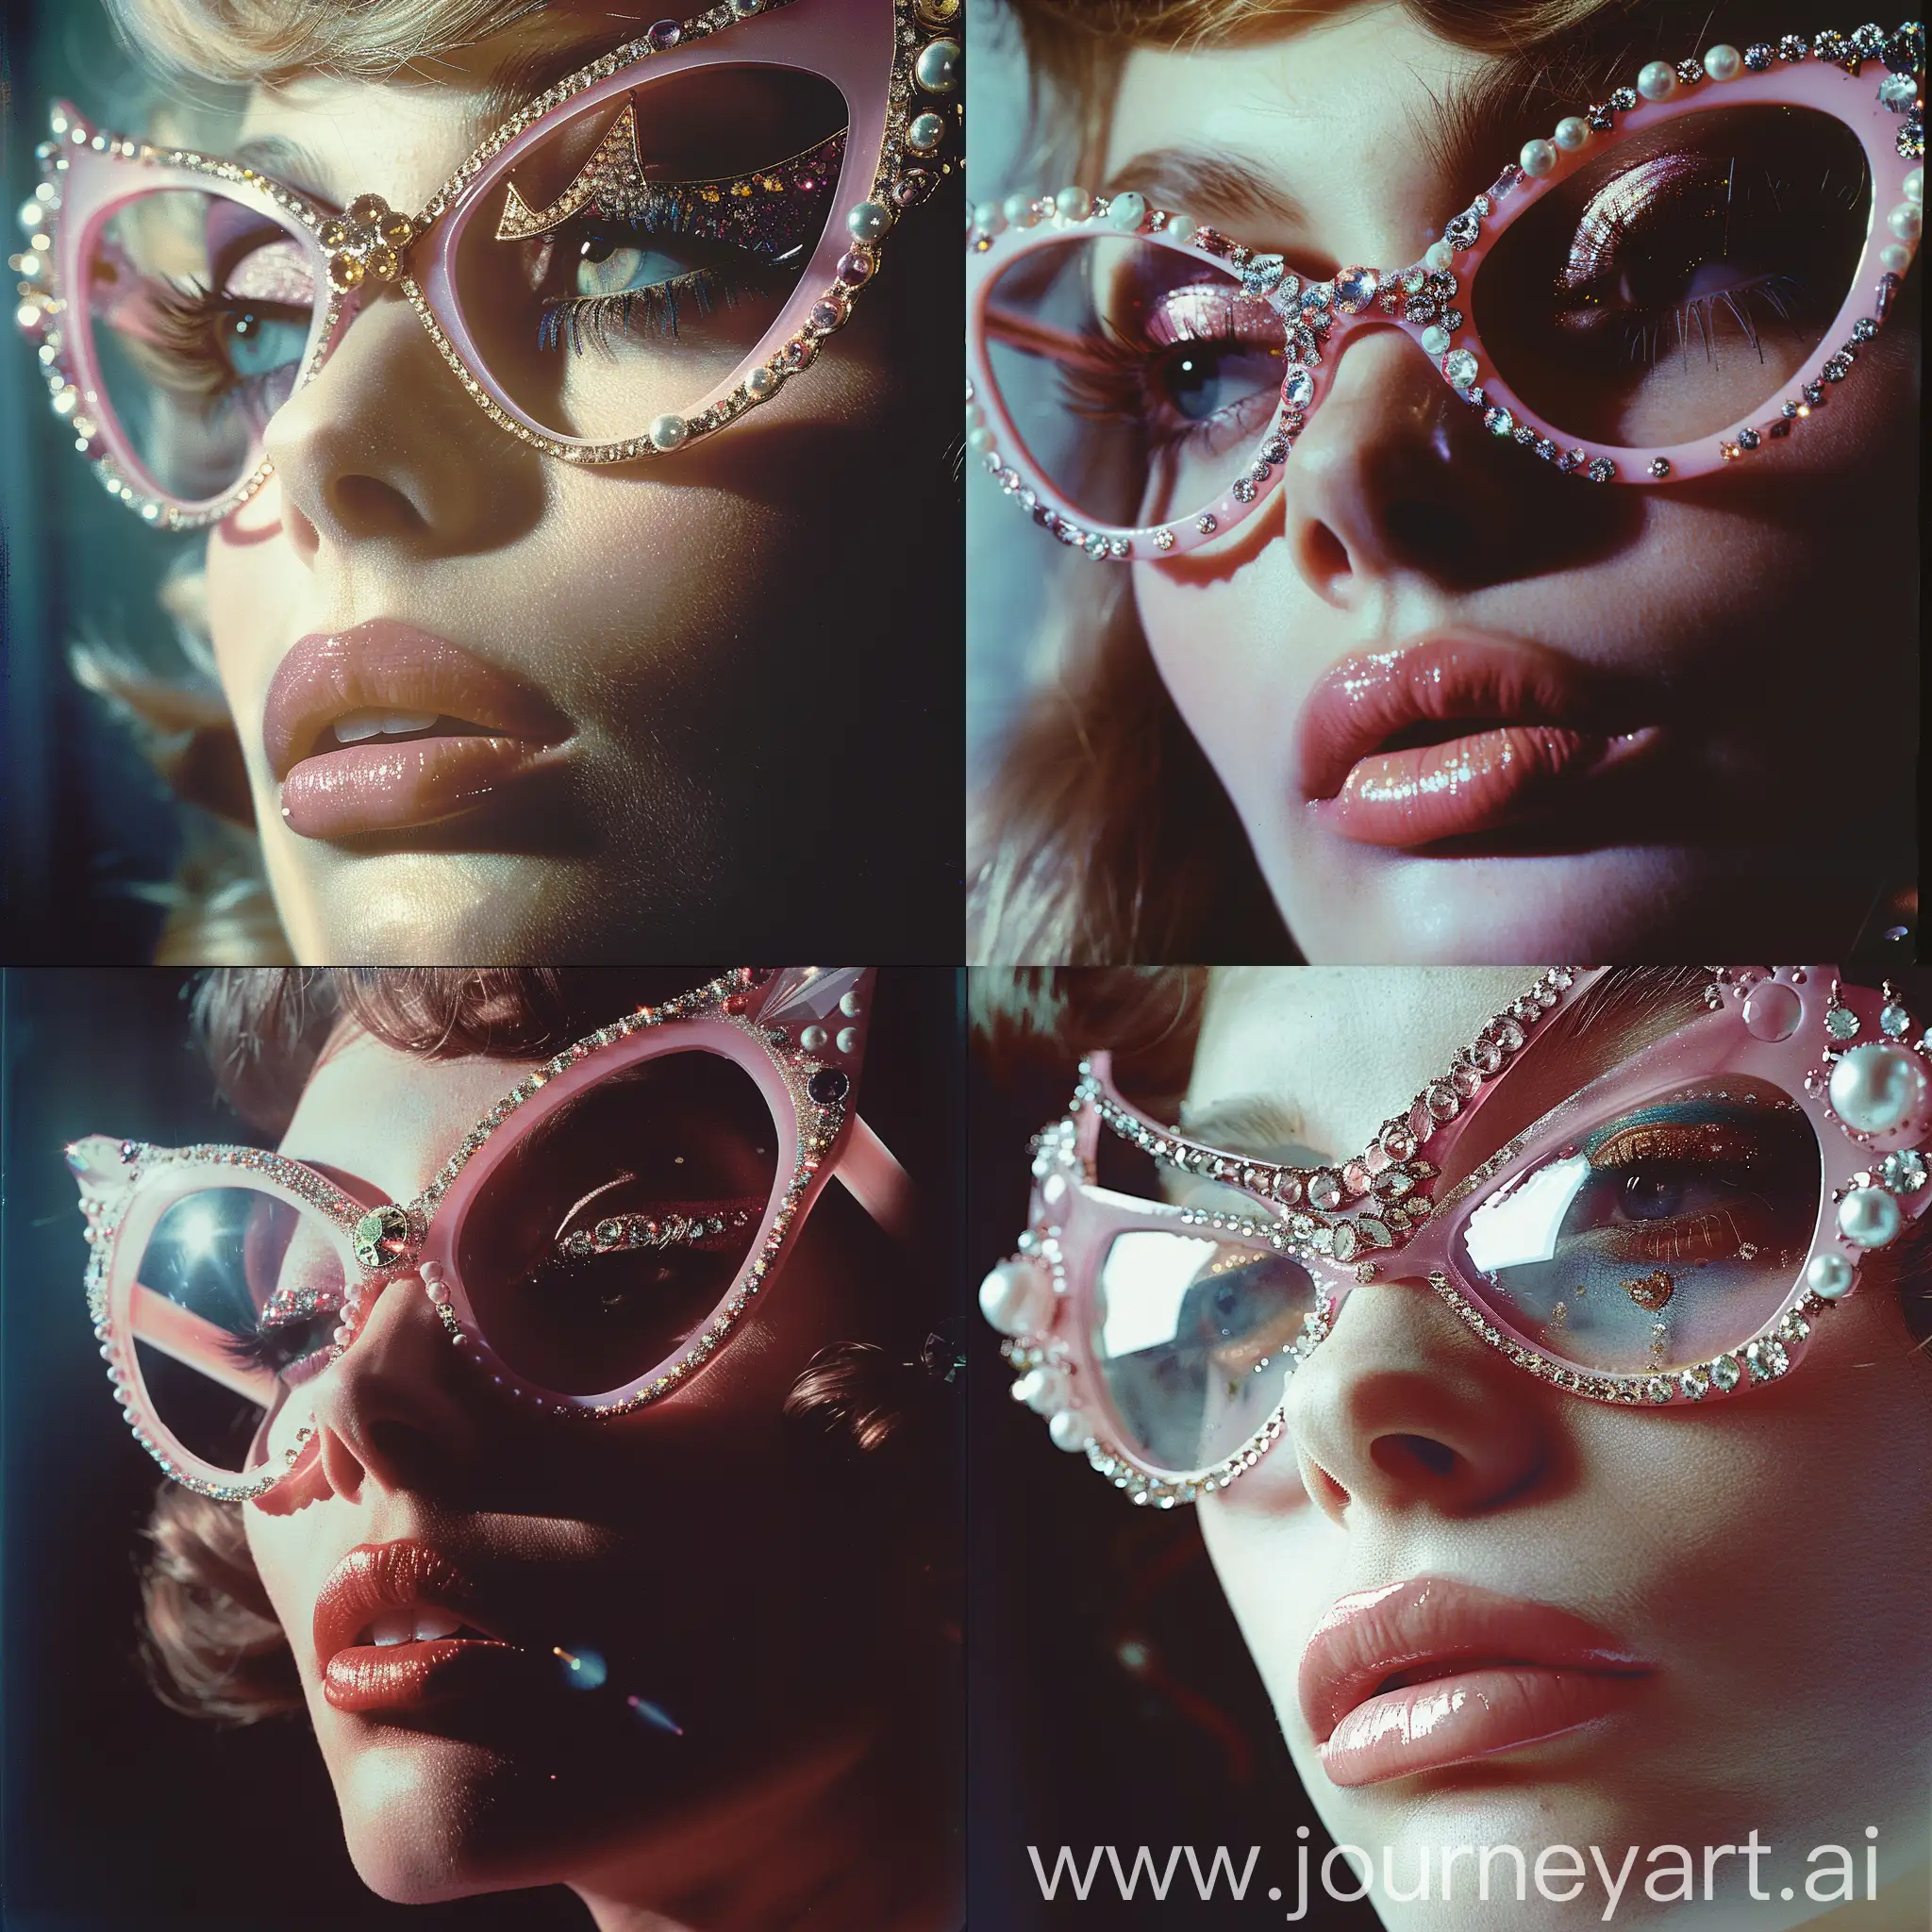 Glamorous-Retro-Fashion-Illustration-Hepburn-and-Ana-de-Armas-in-Pink-Cat-Eye-Glasses